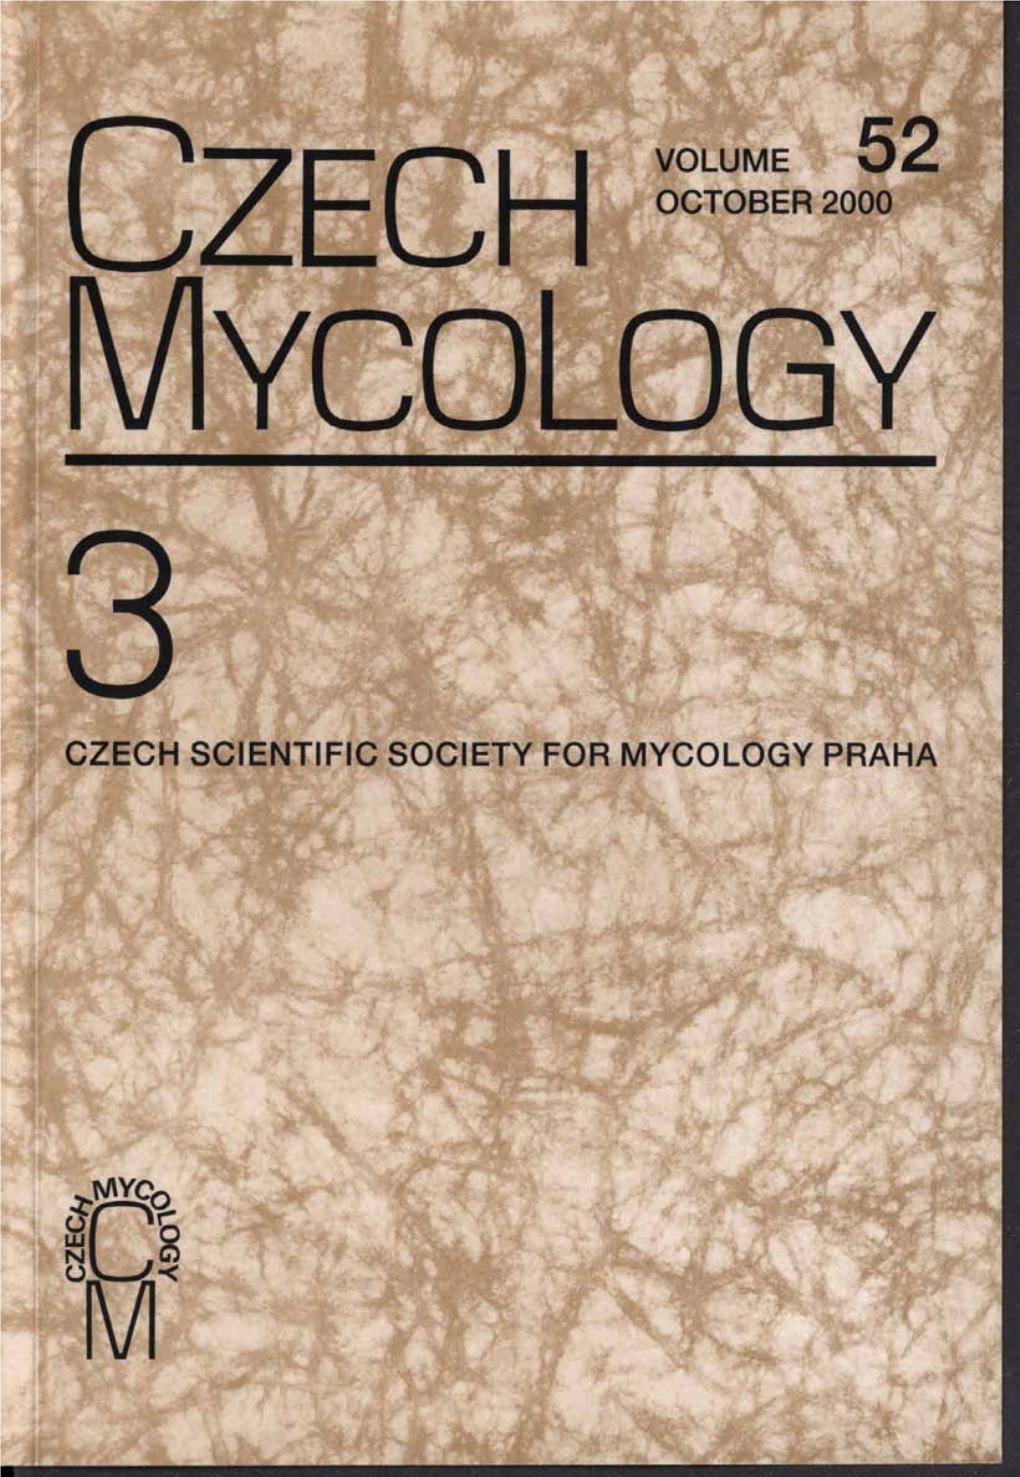 Czech Scientific Society for Mycology Praha